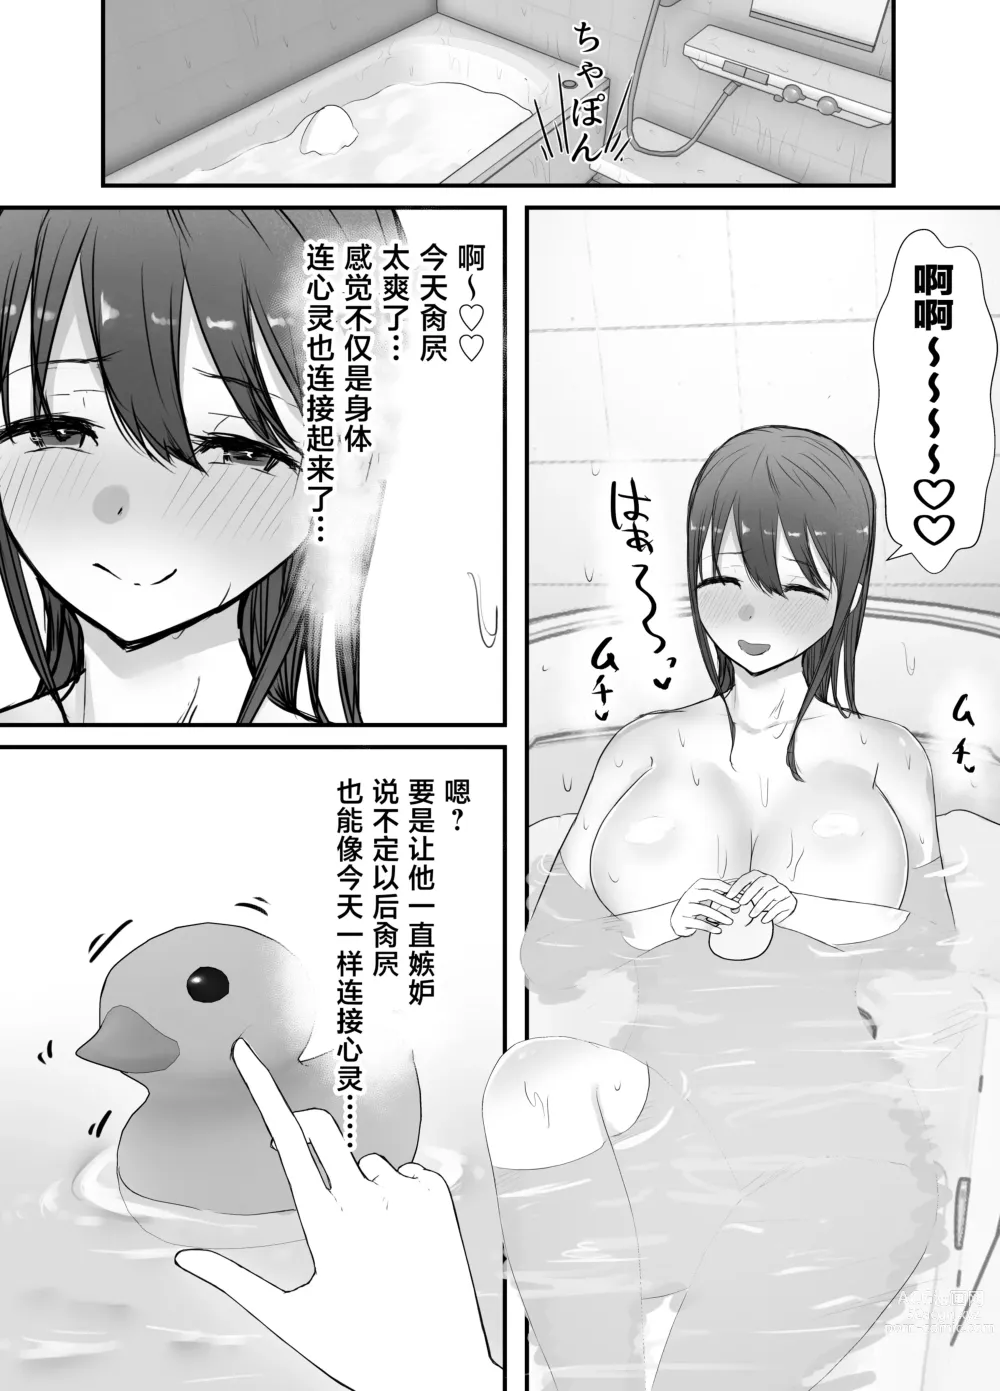 Page 21 of doujinshi 戴绿帽后悔似乎已经迟了哟?3